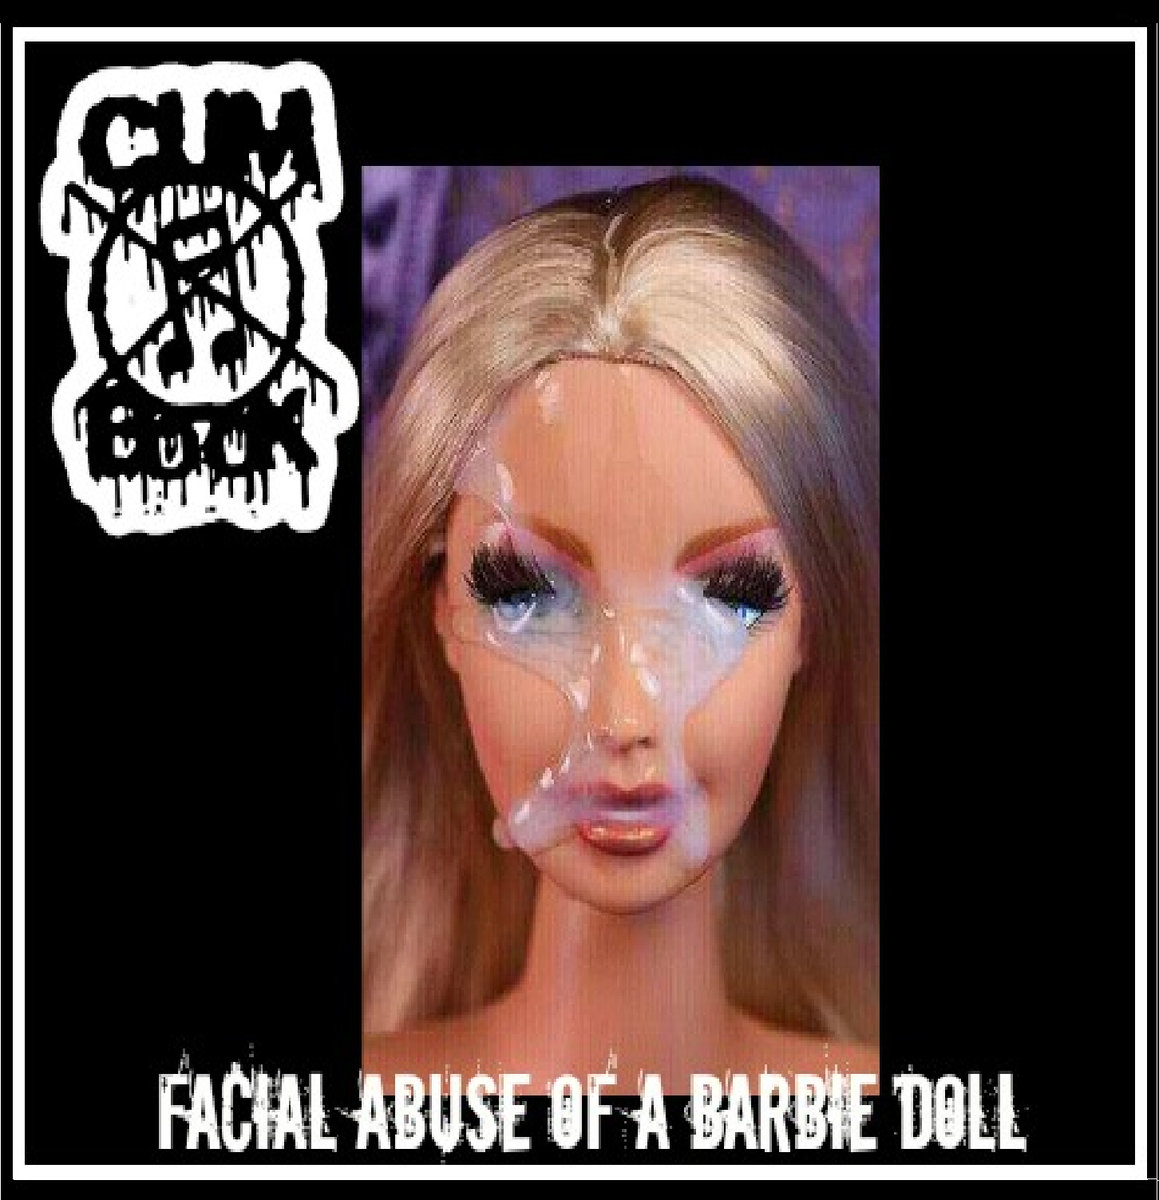 Cumming on barbie dolls